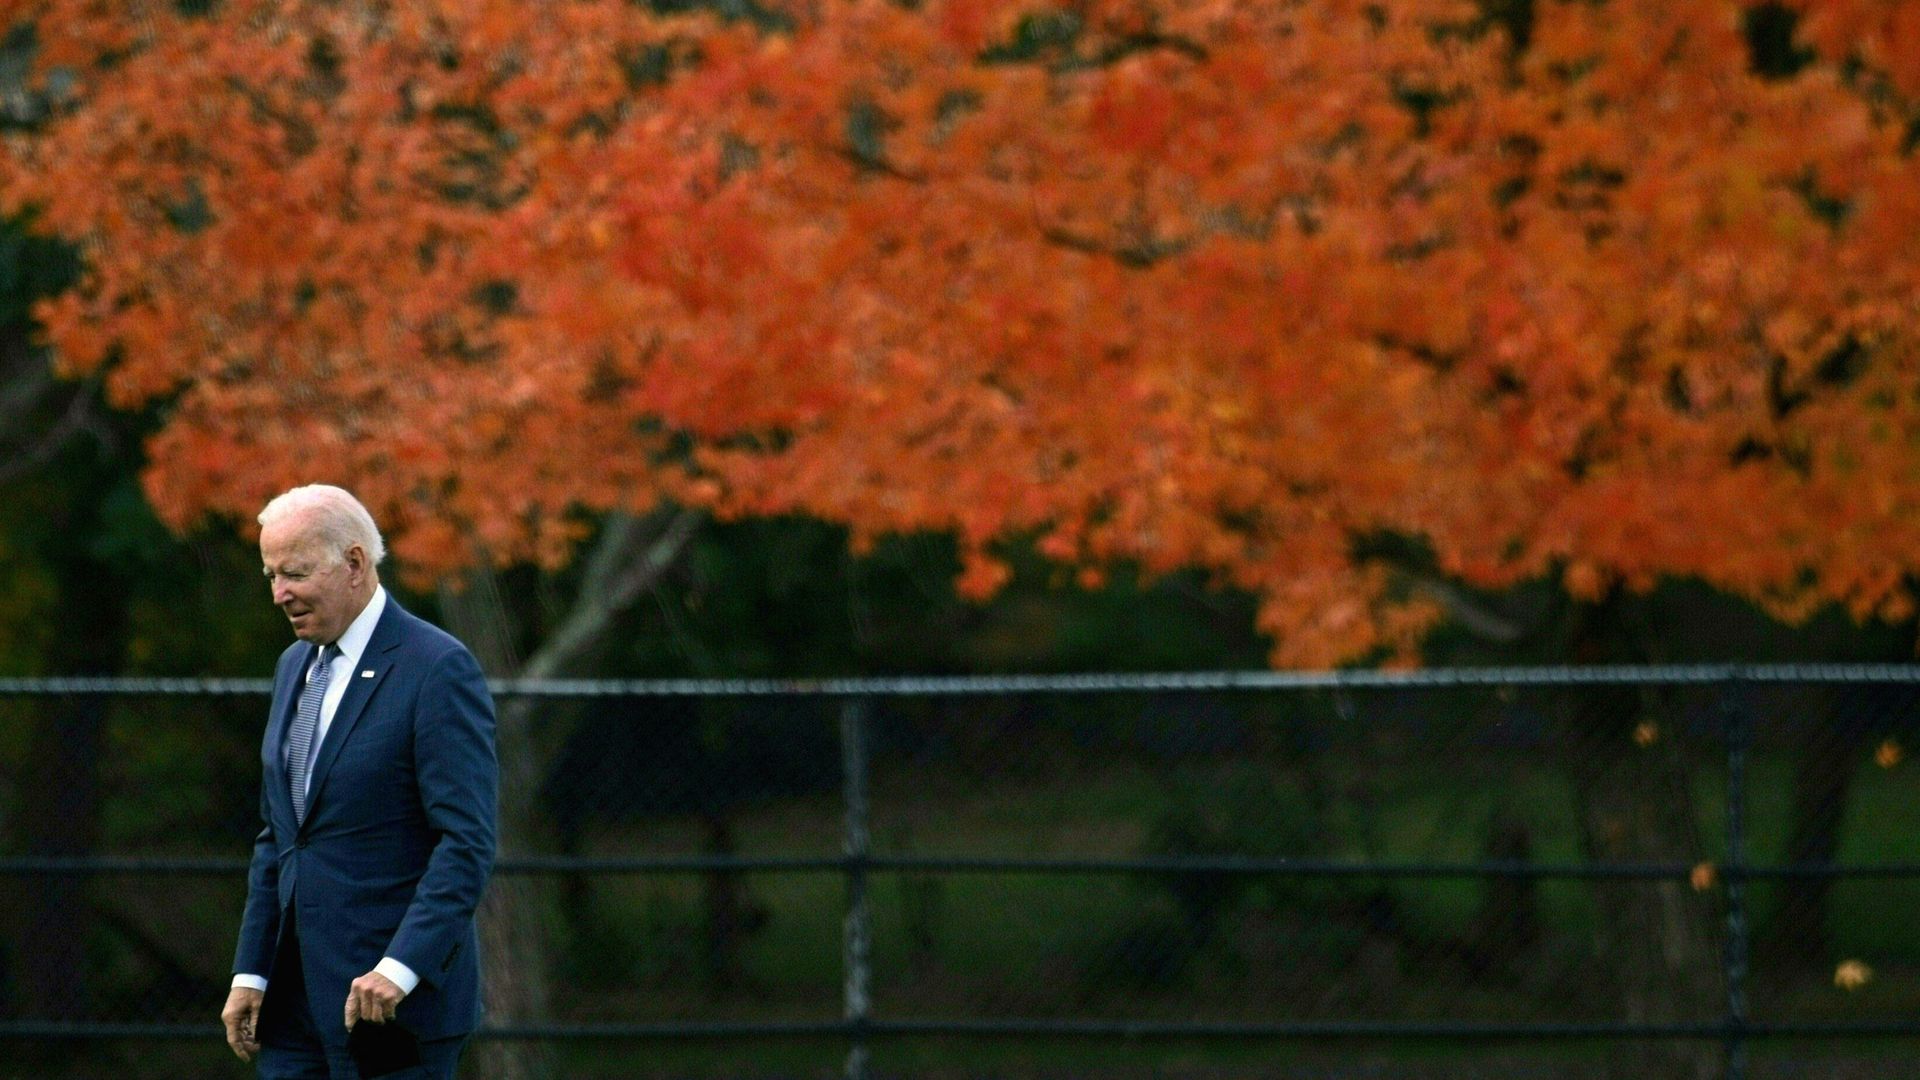 President Biden is seen walking against a backdrop of bright orange fall leaves.